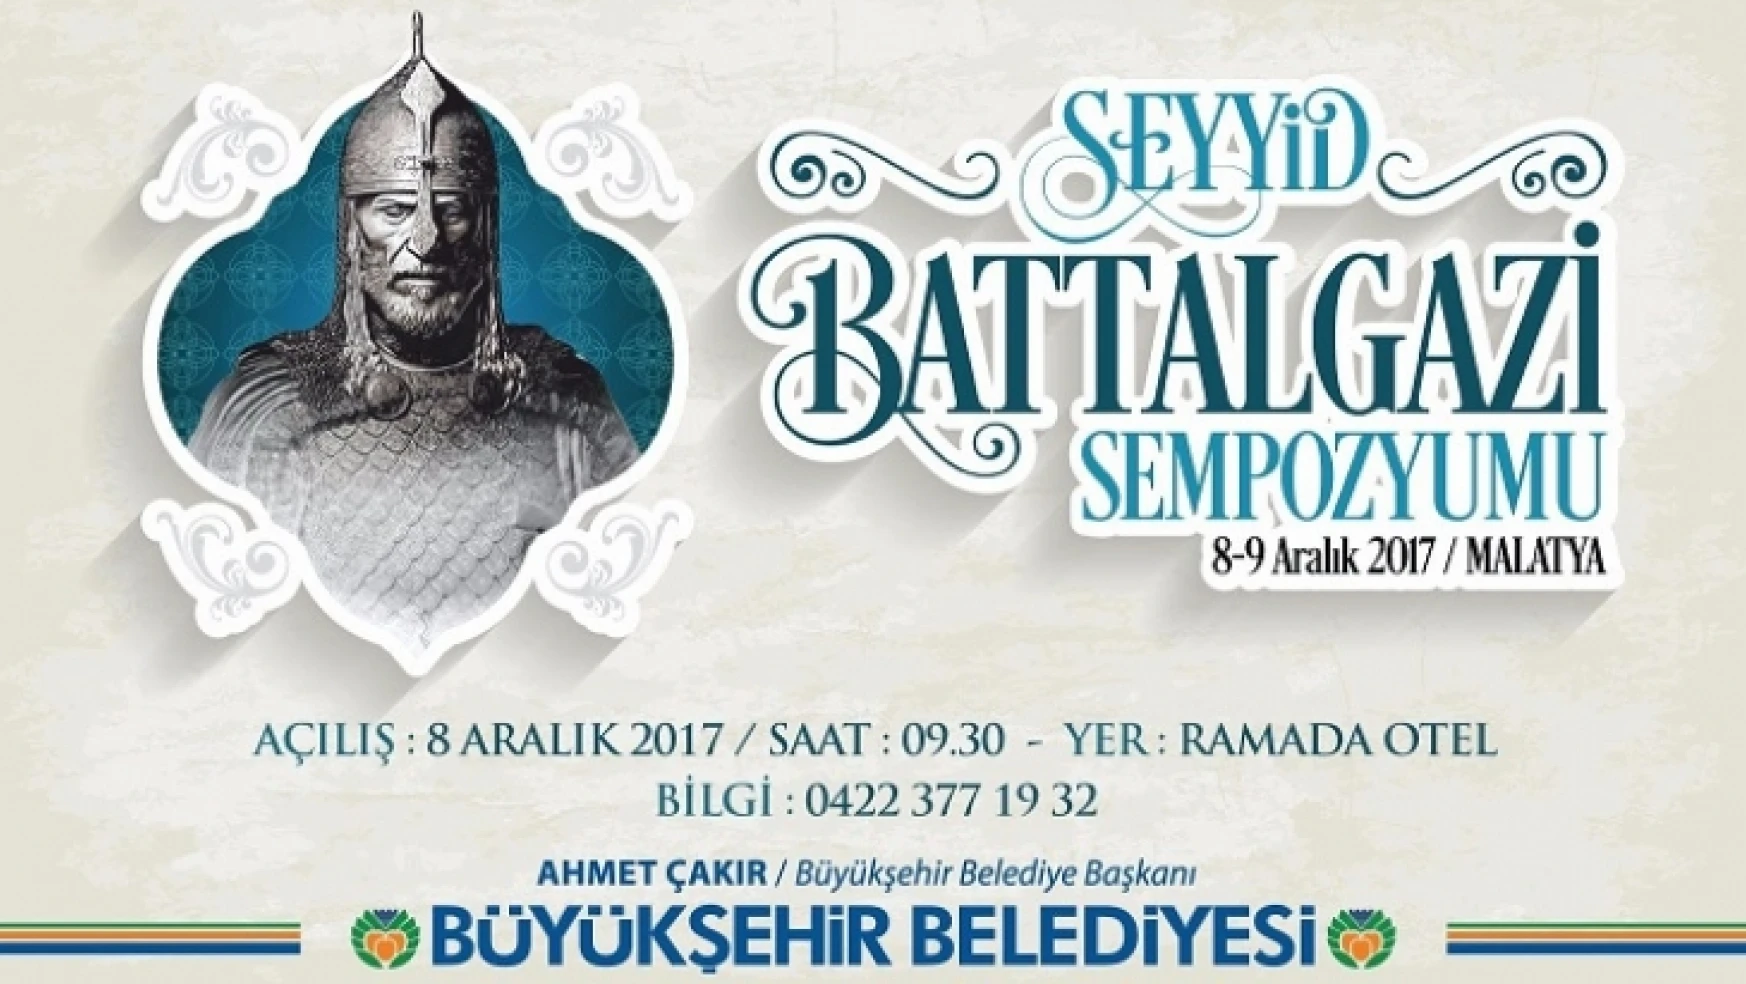 Malatya Büyükşehir'den  Seyyid Battalgazi Sempozyumu